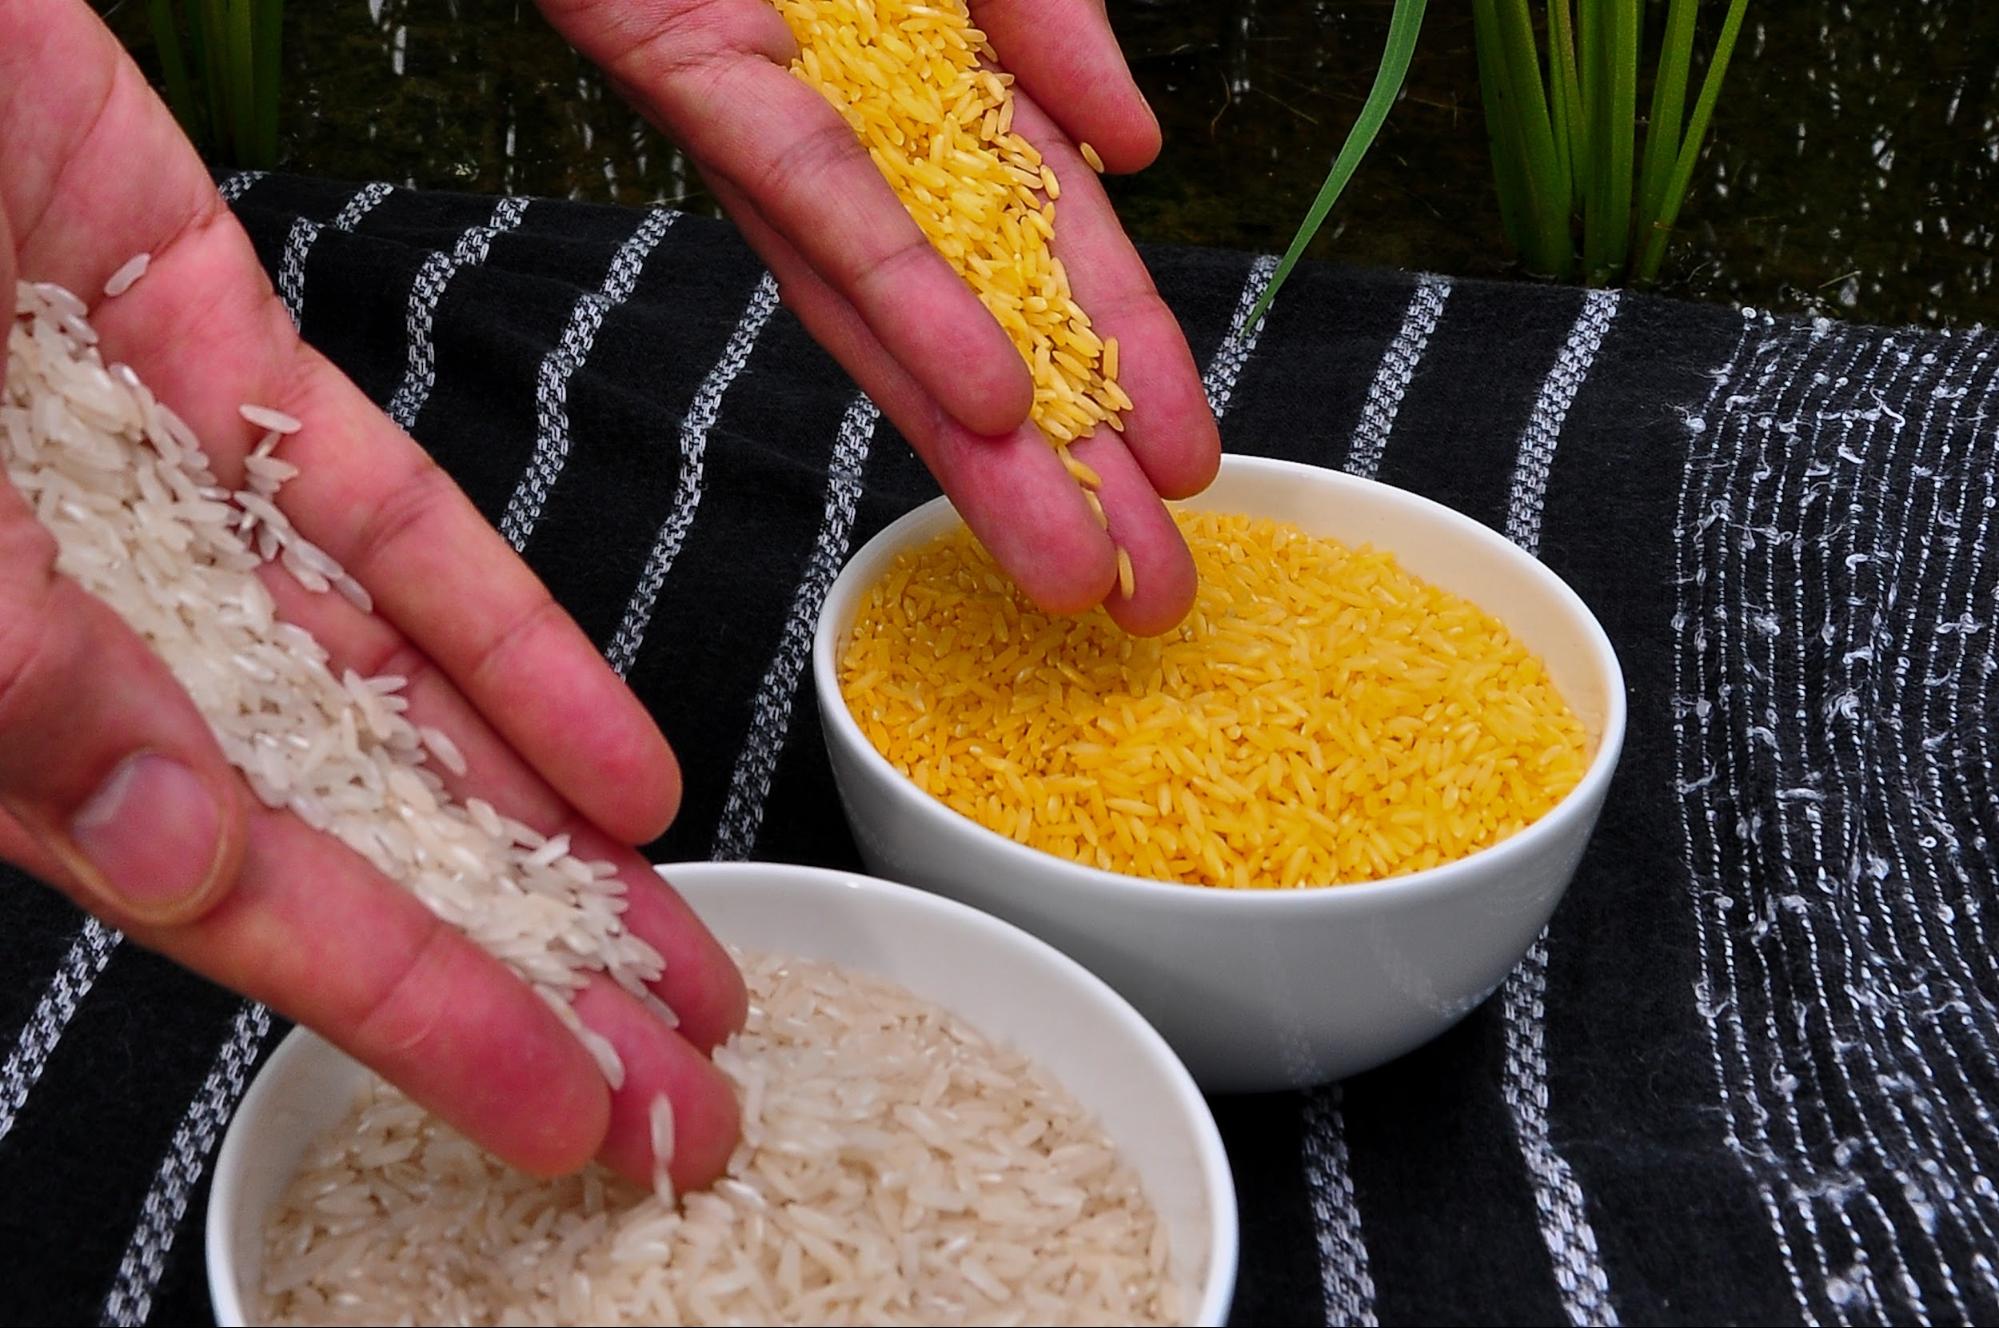 https://upload.wikimedia.org/wikipedia/commons/2/29/Golden_Rice.jpg